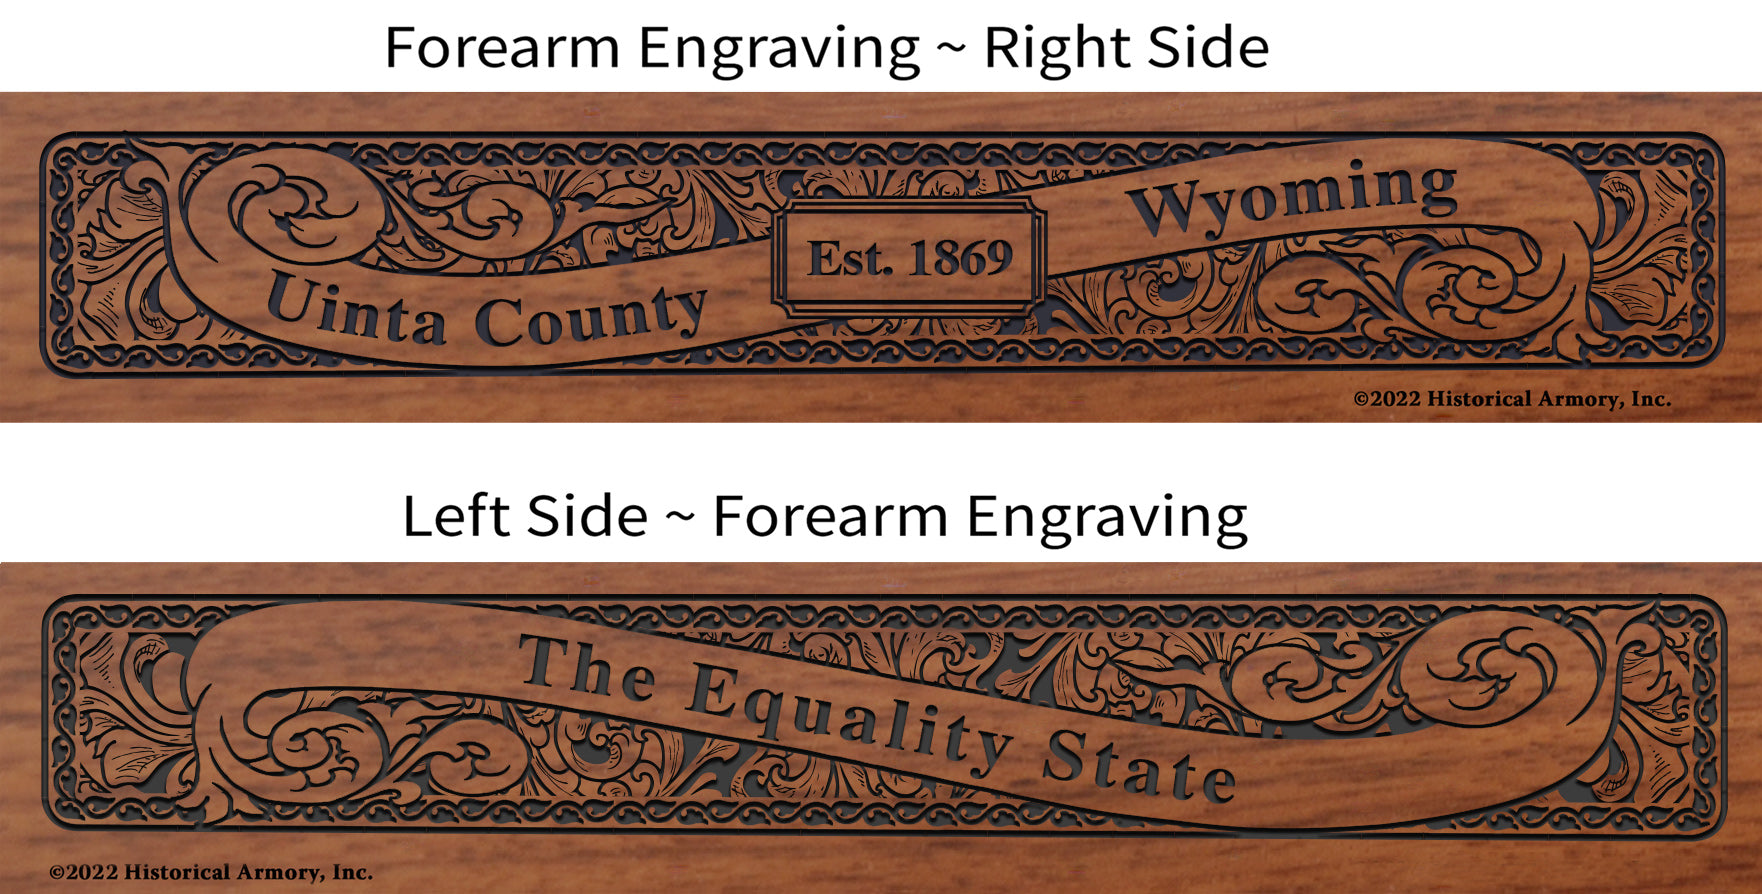 Uinta County Wyoming Engraved Rifle Forearm